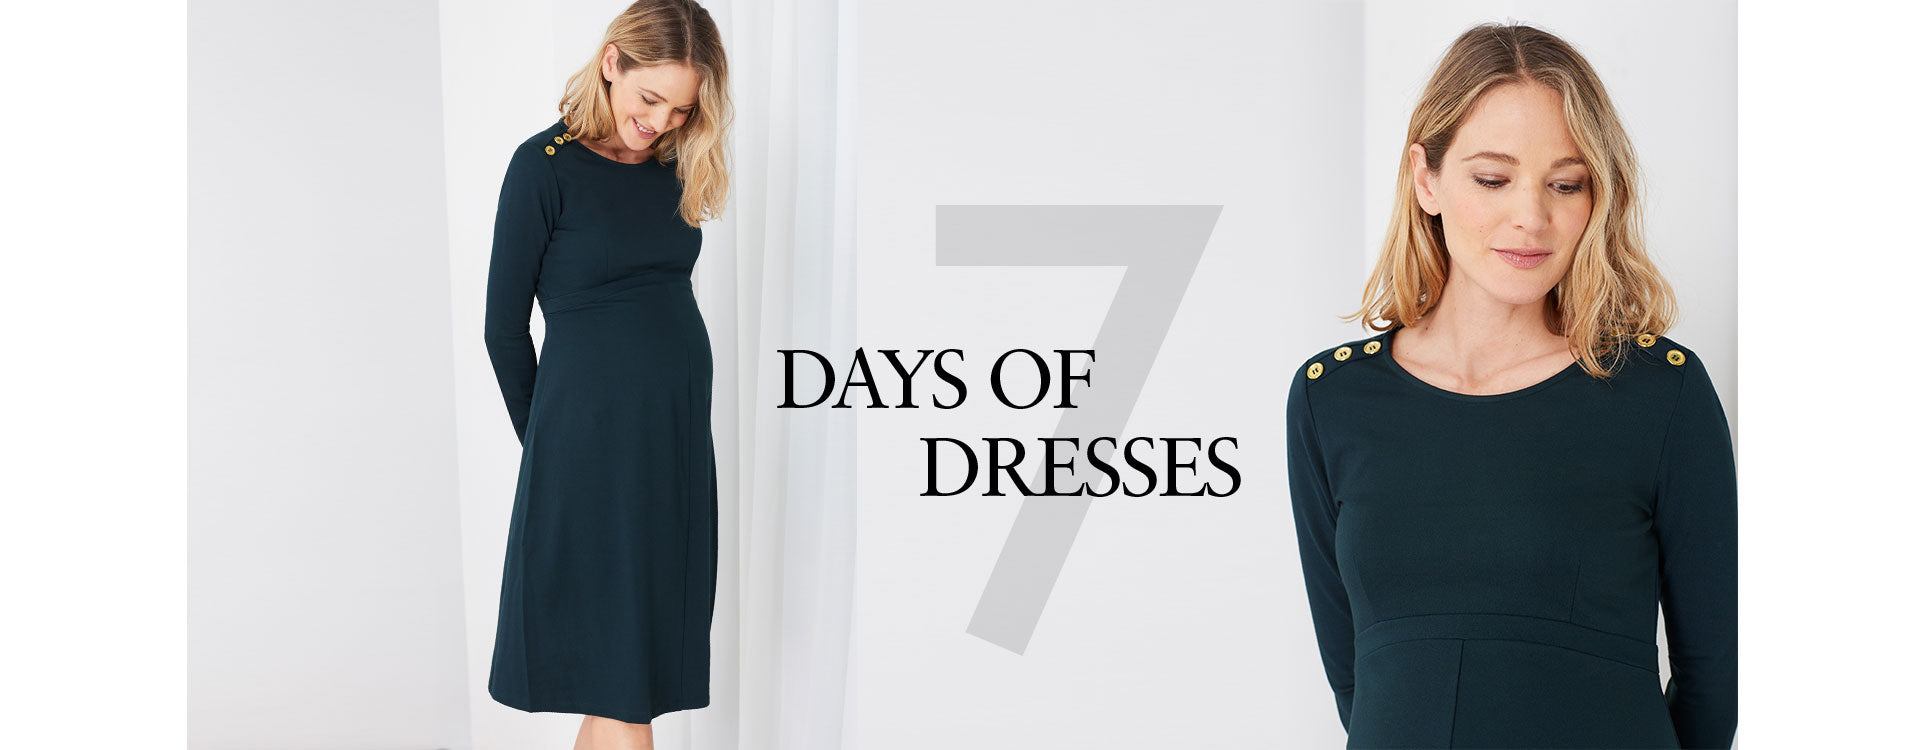 7 Days of Dresses